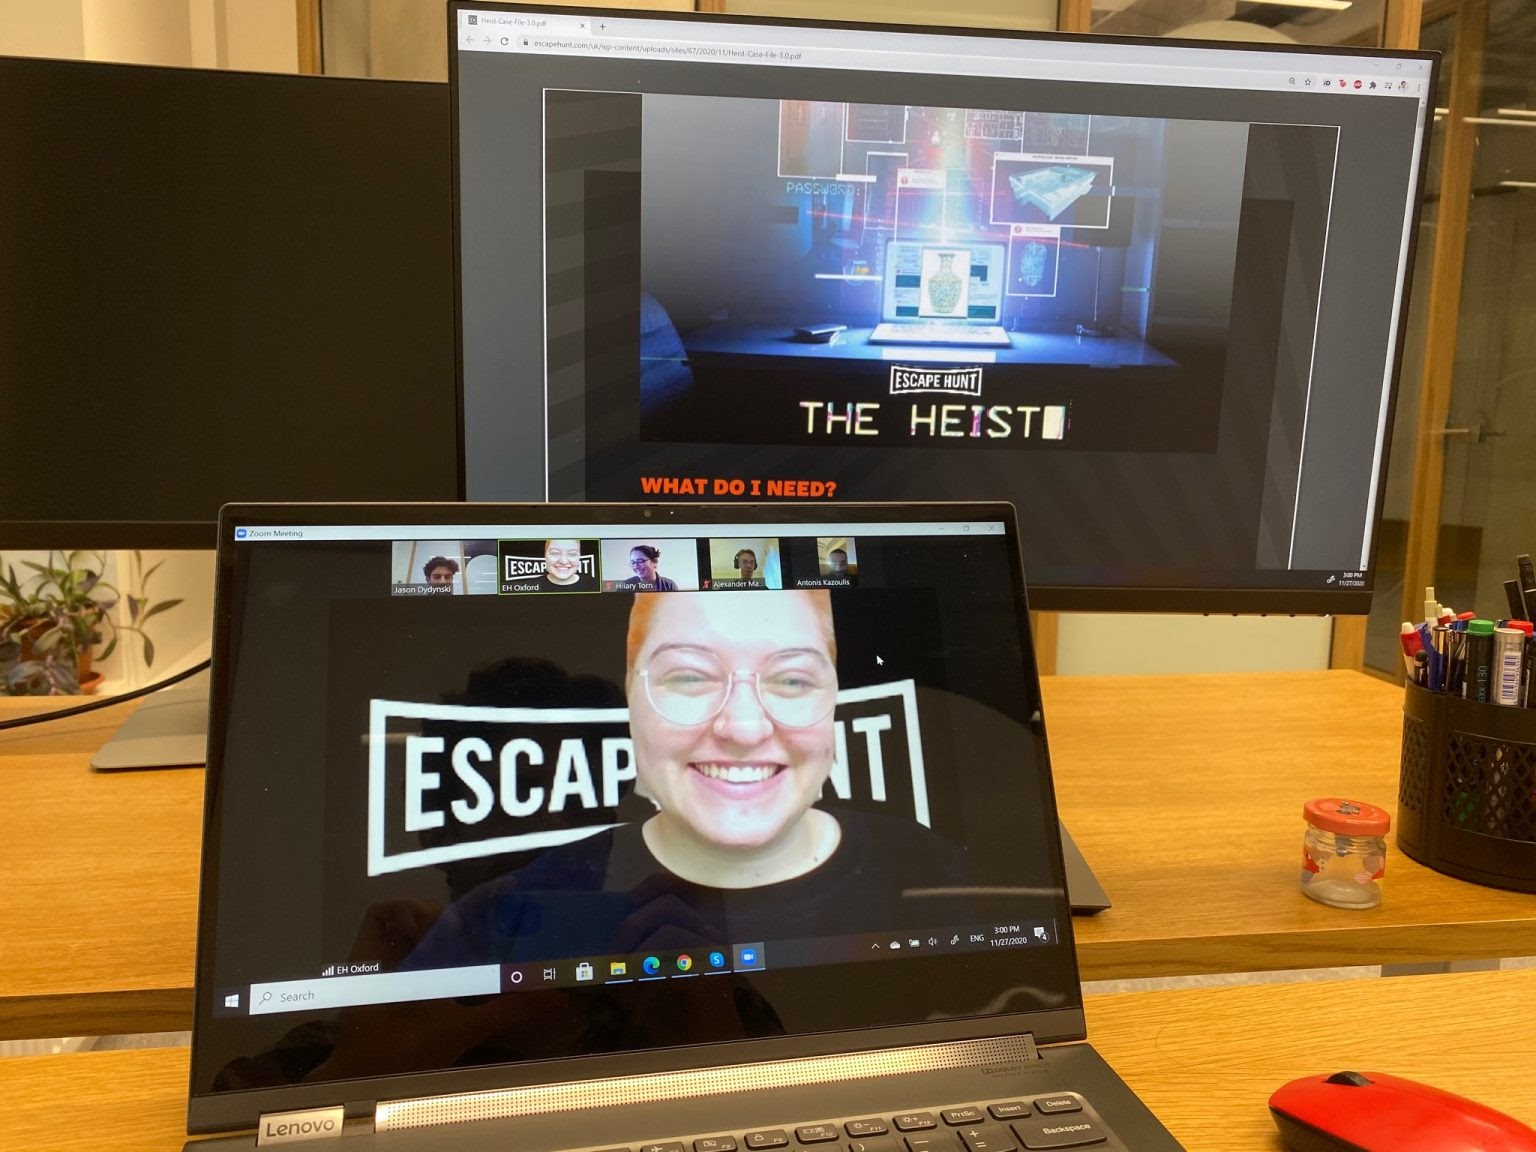 Escape Room Game  Outdoor Virtual Online